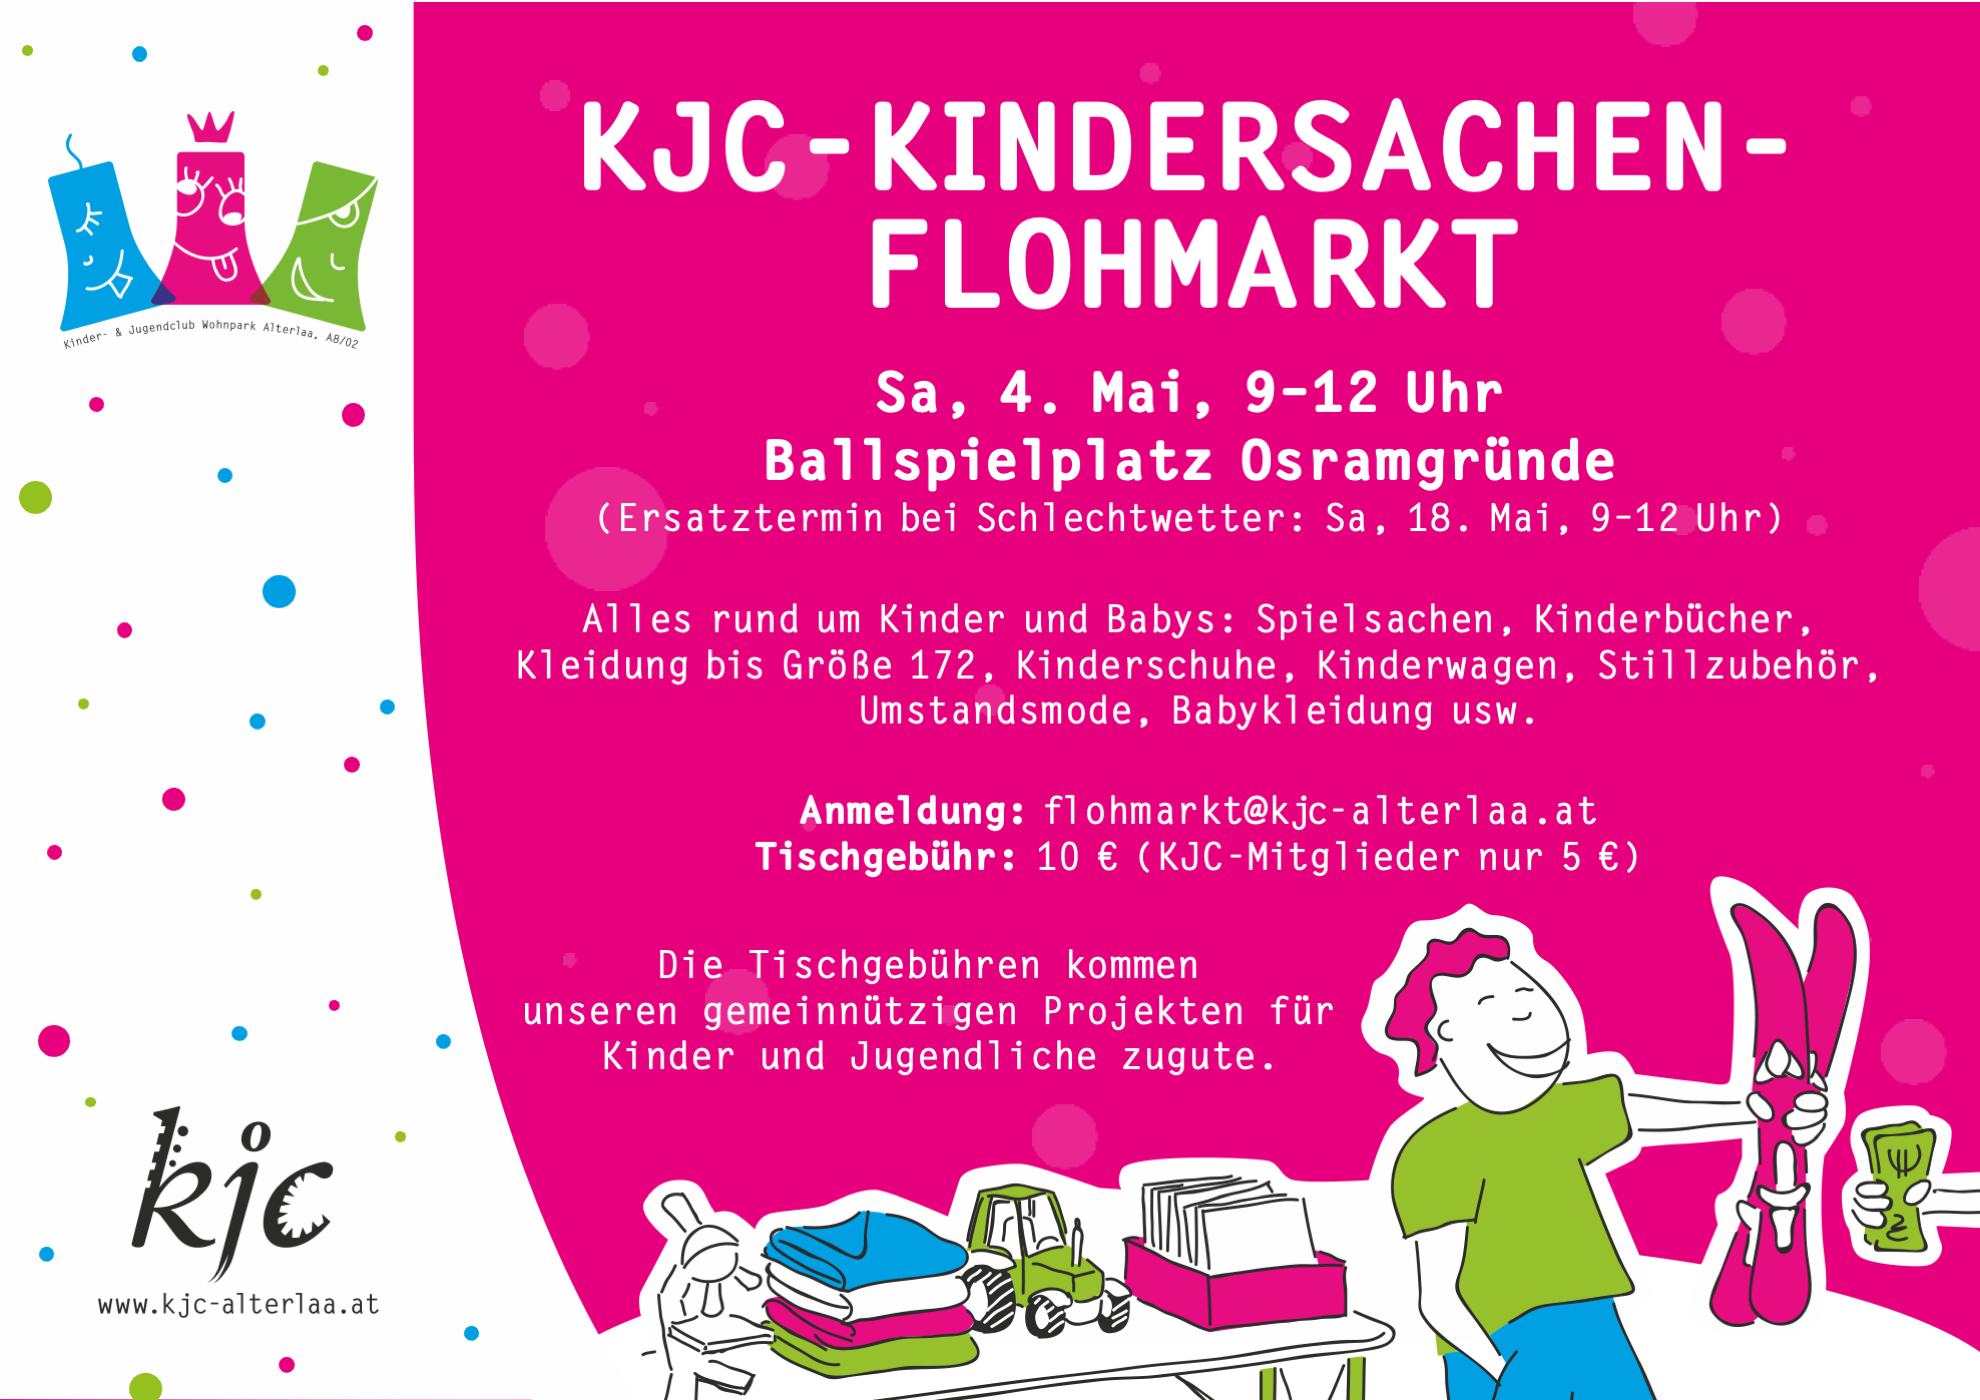 Kindersachen-Flohmarkt am 4. Mai, Ballspielplatz Osramgründe